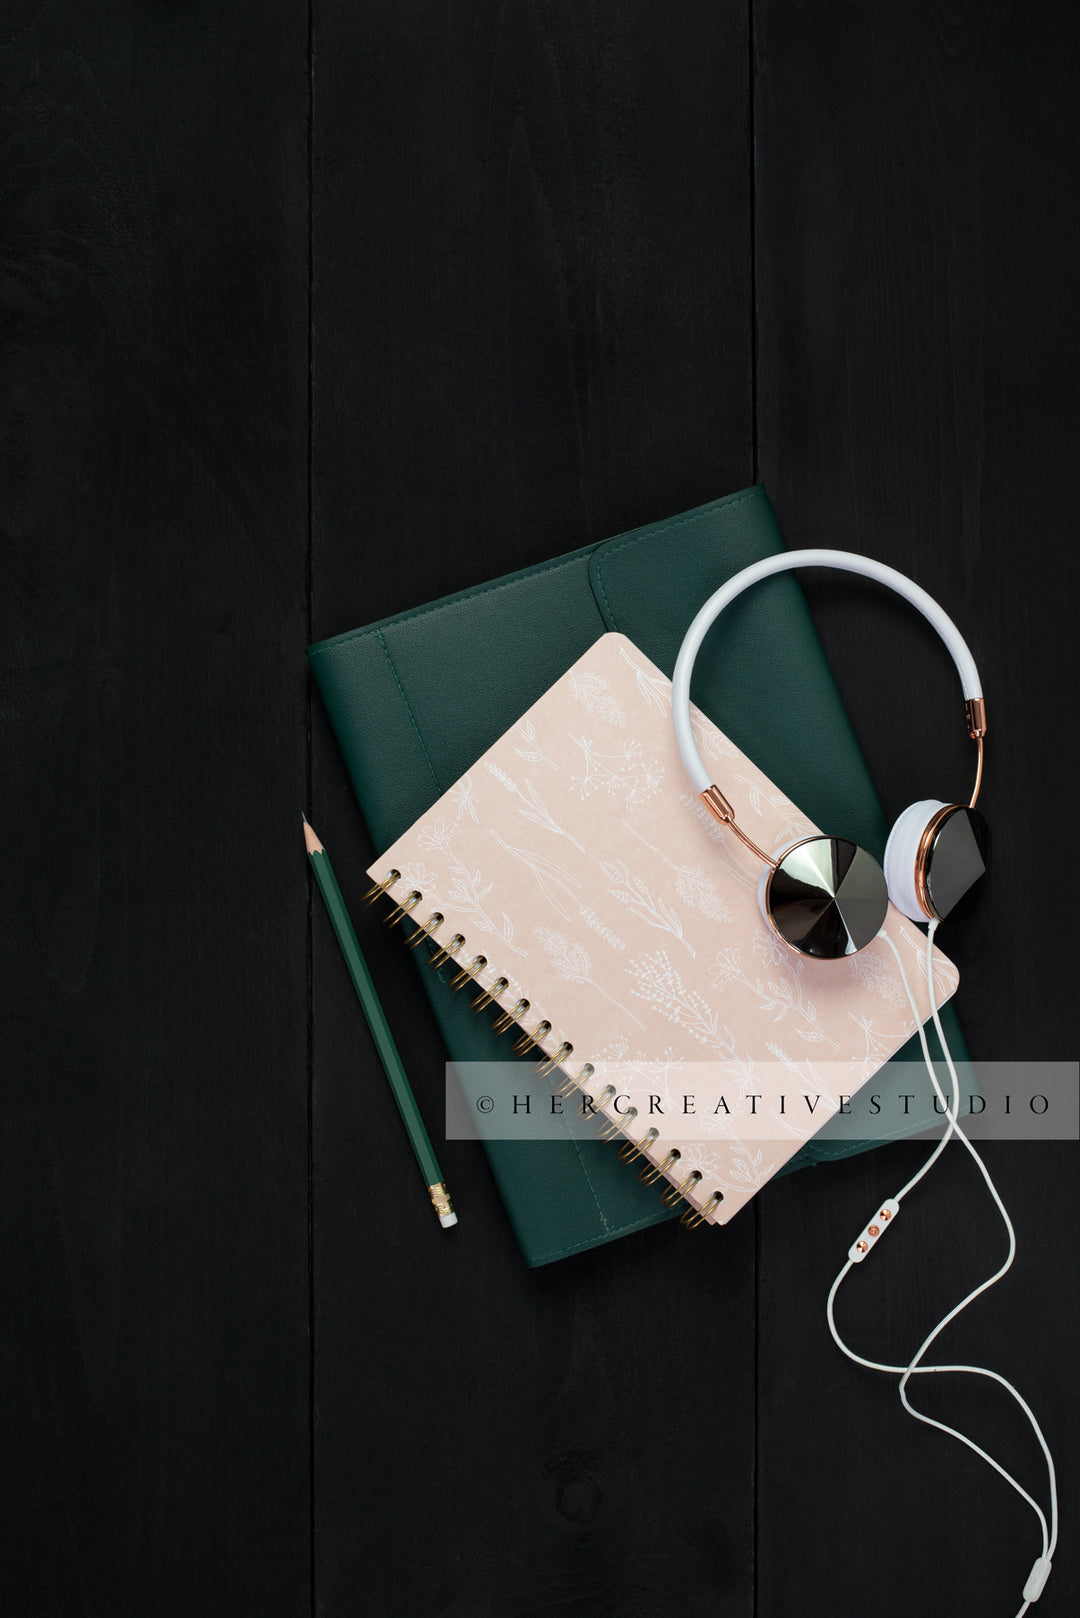 Notebooks, Headphones & Pencil on Black Desk